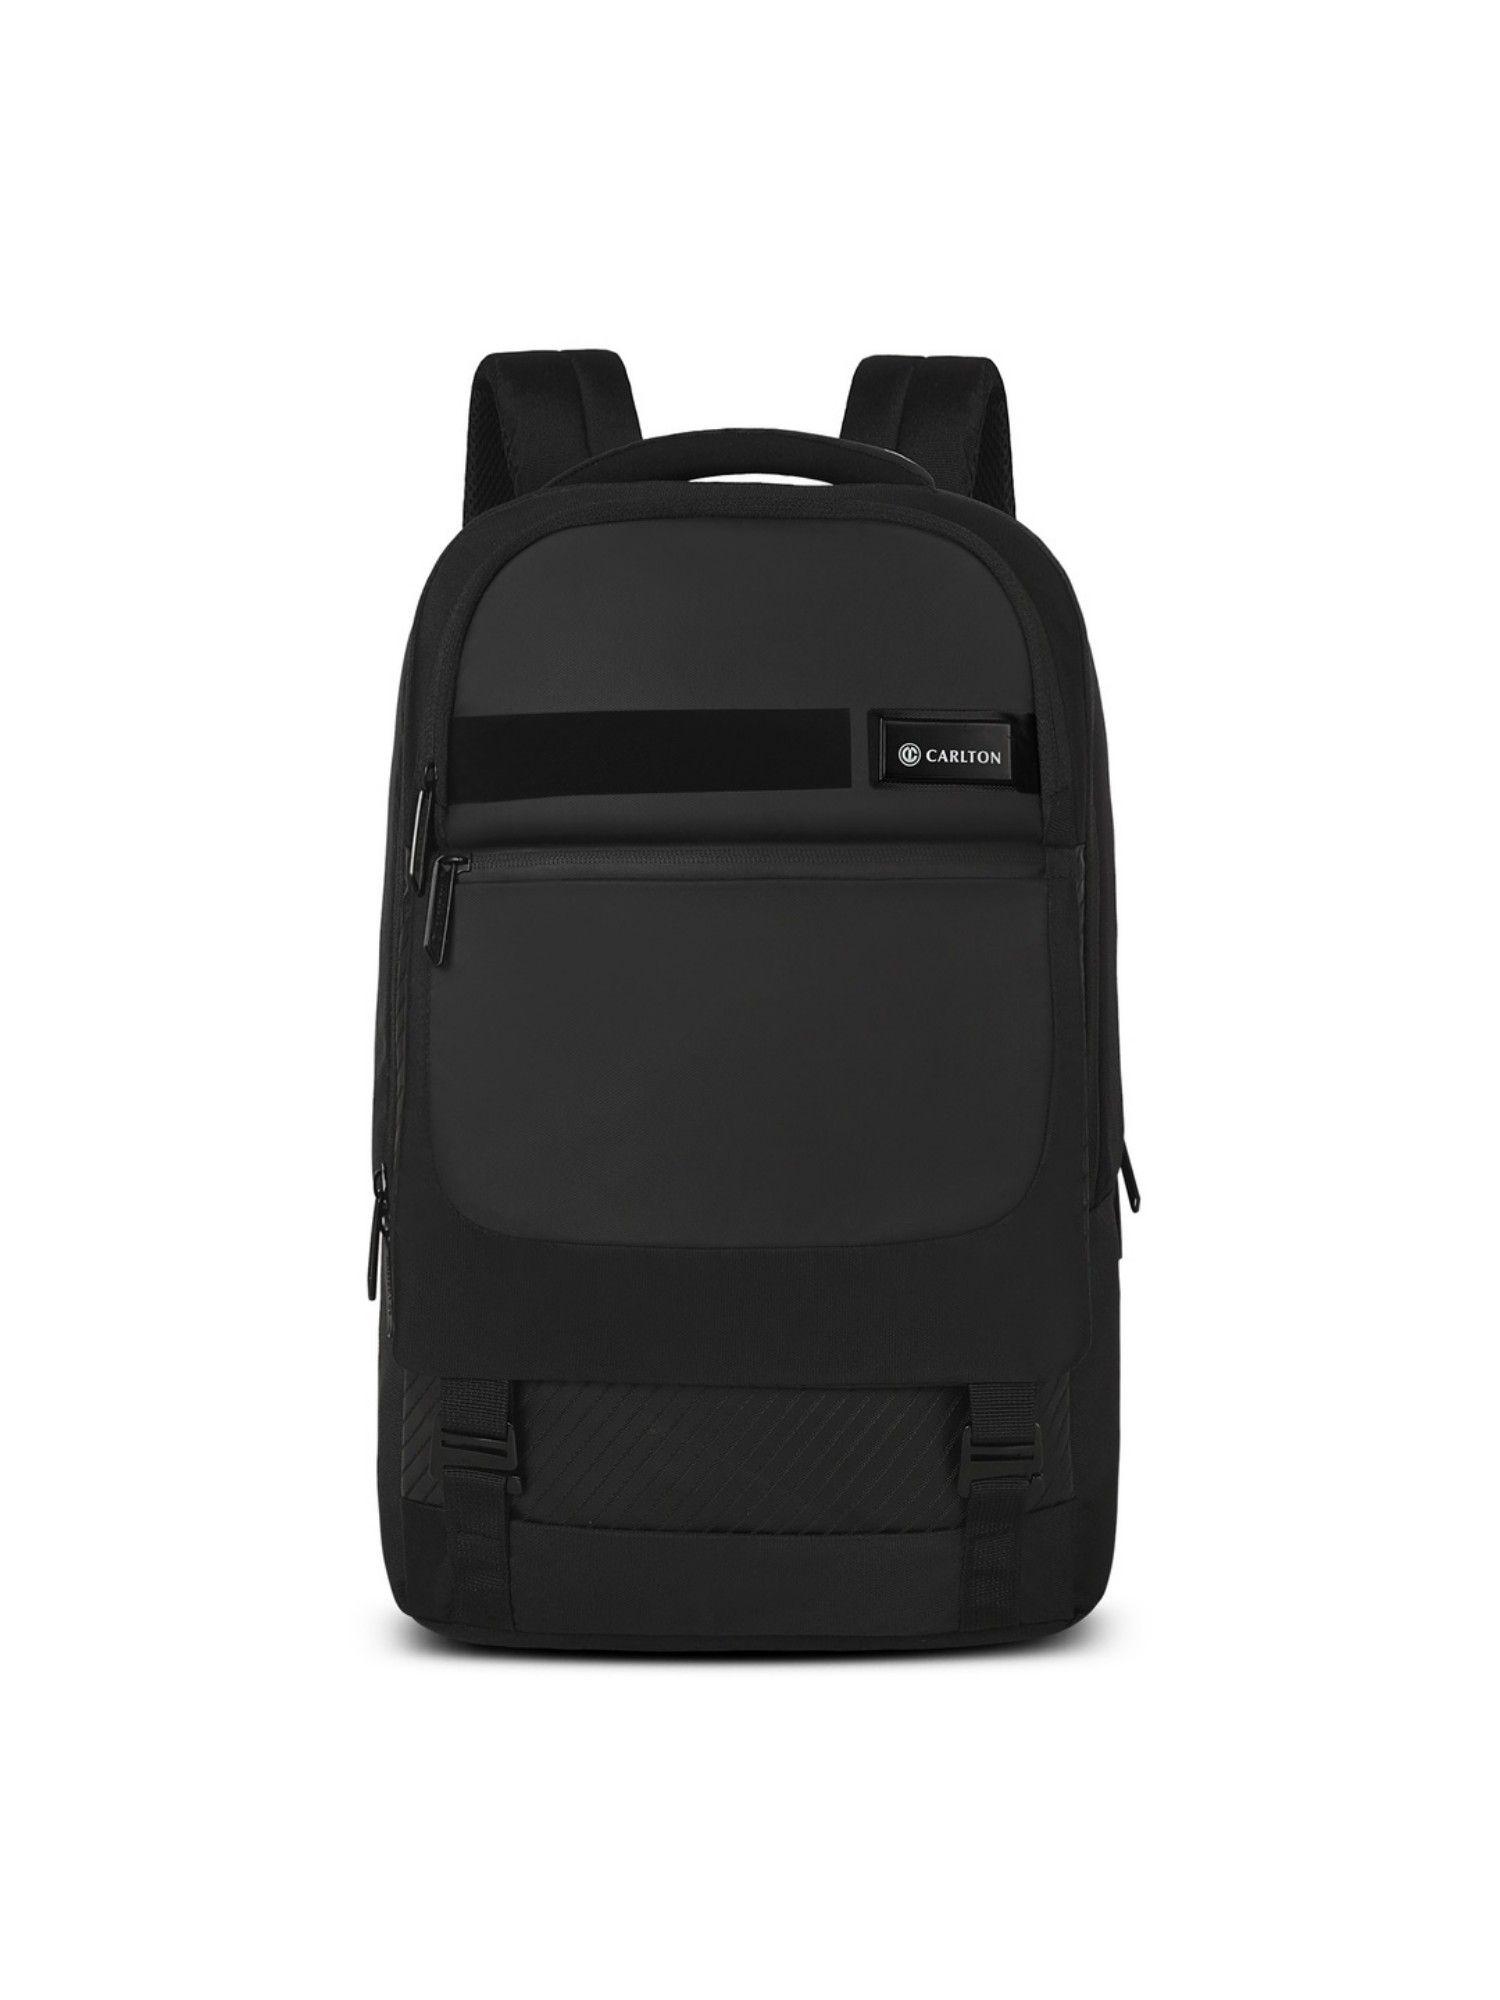 dorset 03 secure laptop backpack midnight black